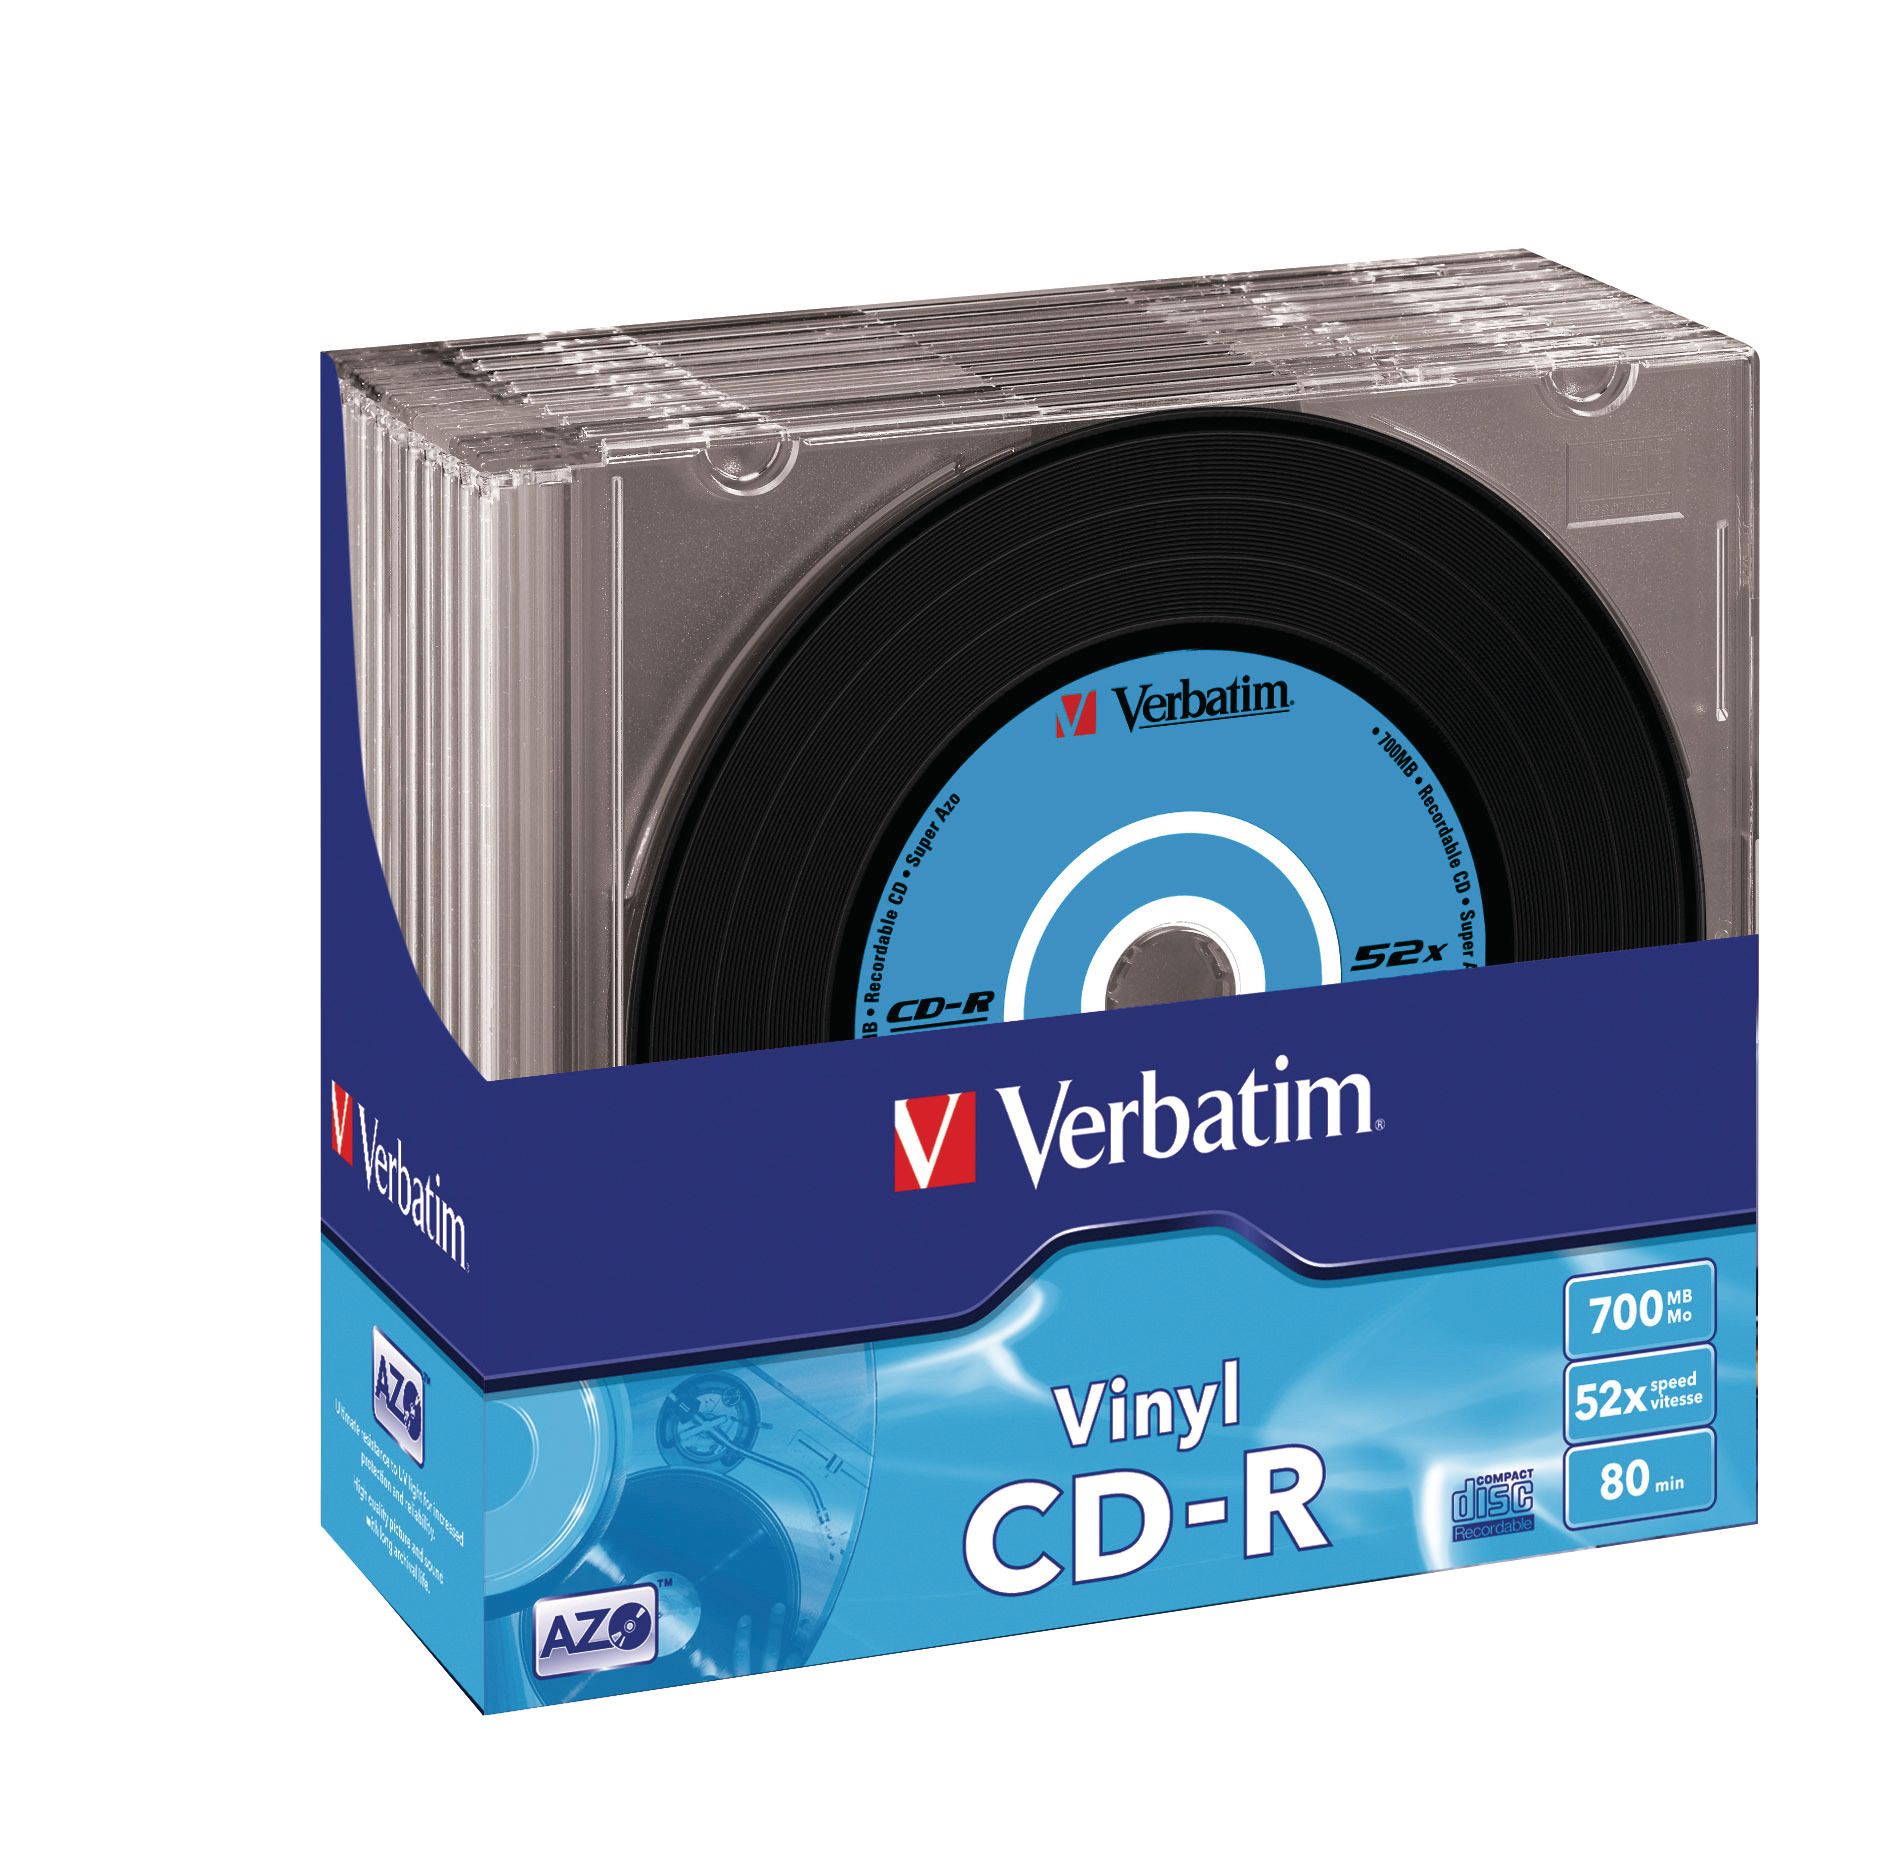 VERBATIM CD-R Slim 80MIN/700MB 43426 52x Vinyl 10 Pcs 52x Vinyl 10 Pcs